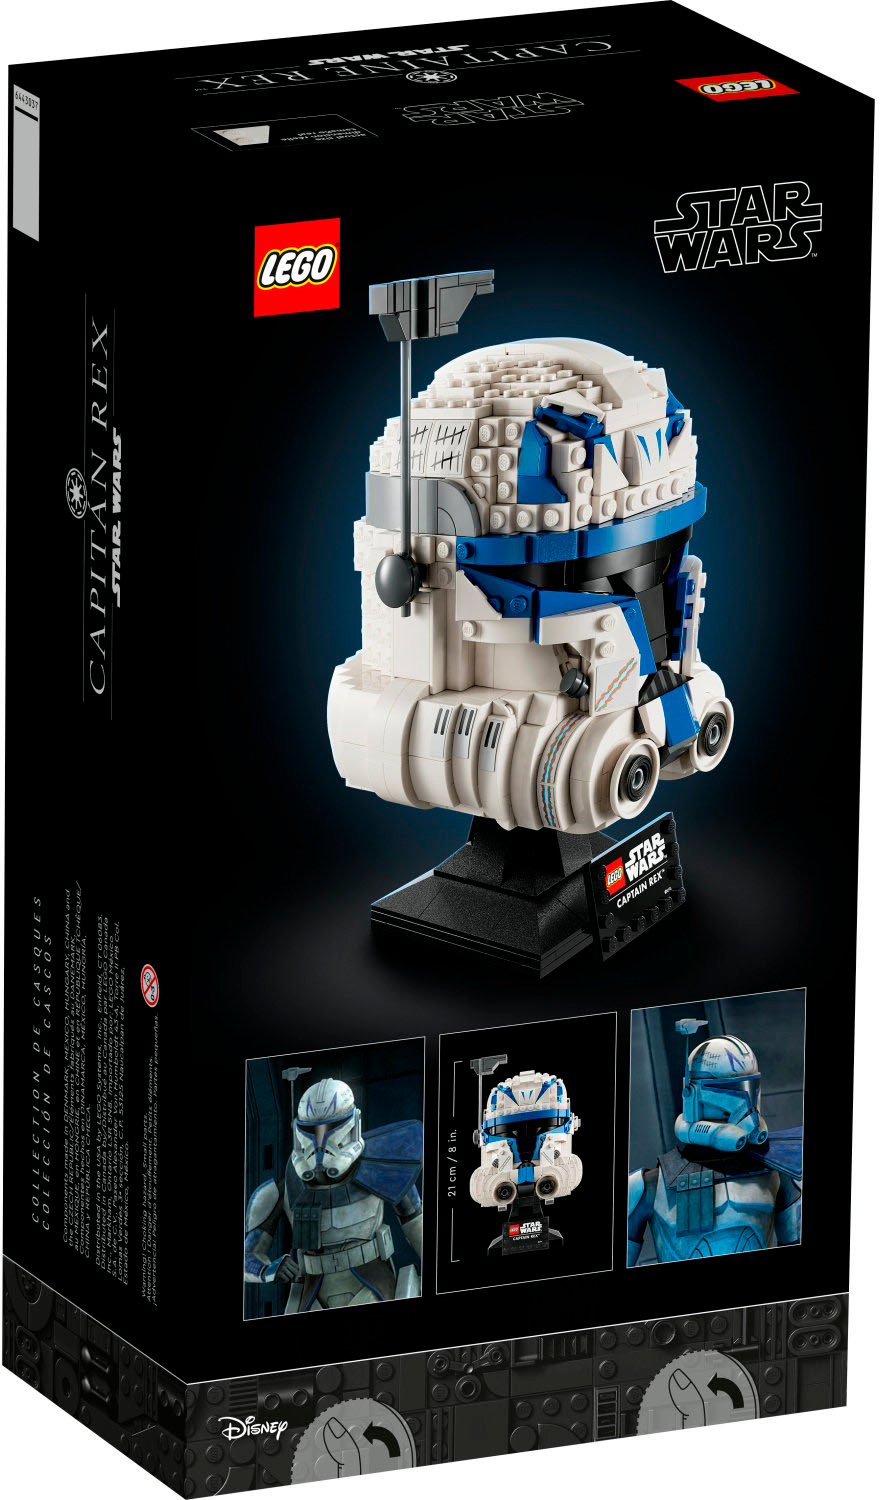 LEGO Star Wars Captain Rex with Helmet Antenna (7869) Minifigure